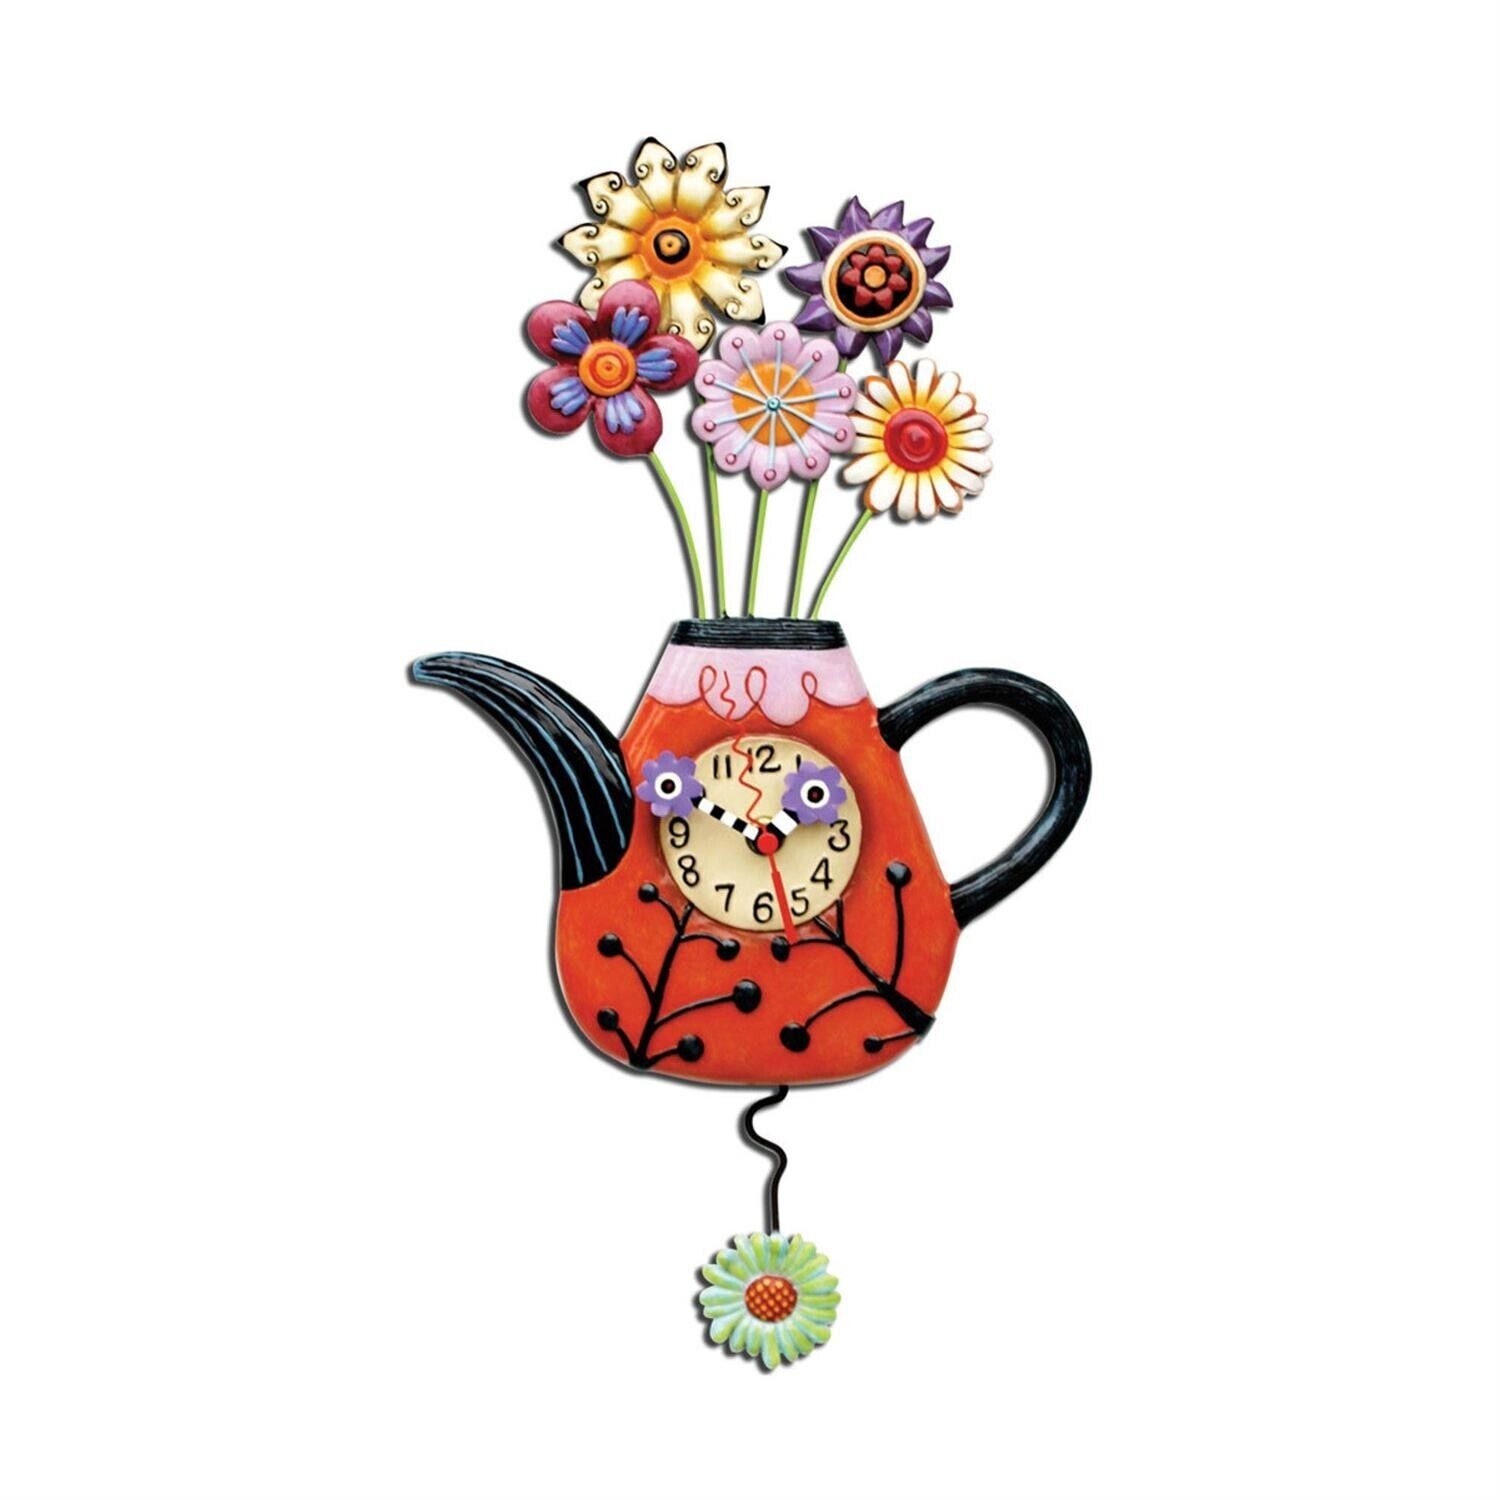 Allen Design Studio Wall Clock: Flower-Tea-Ful Teapot, Item# P9014